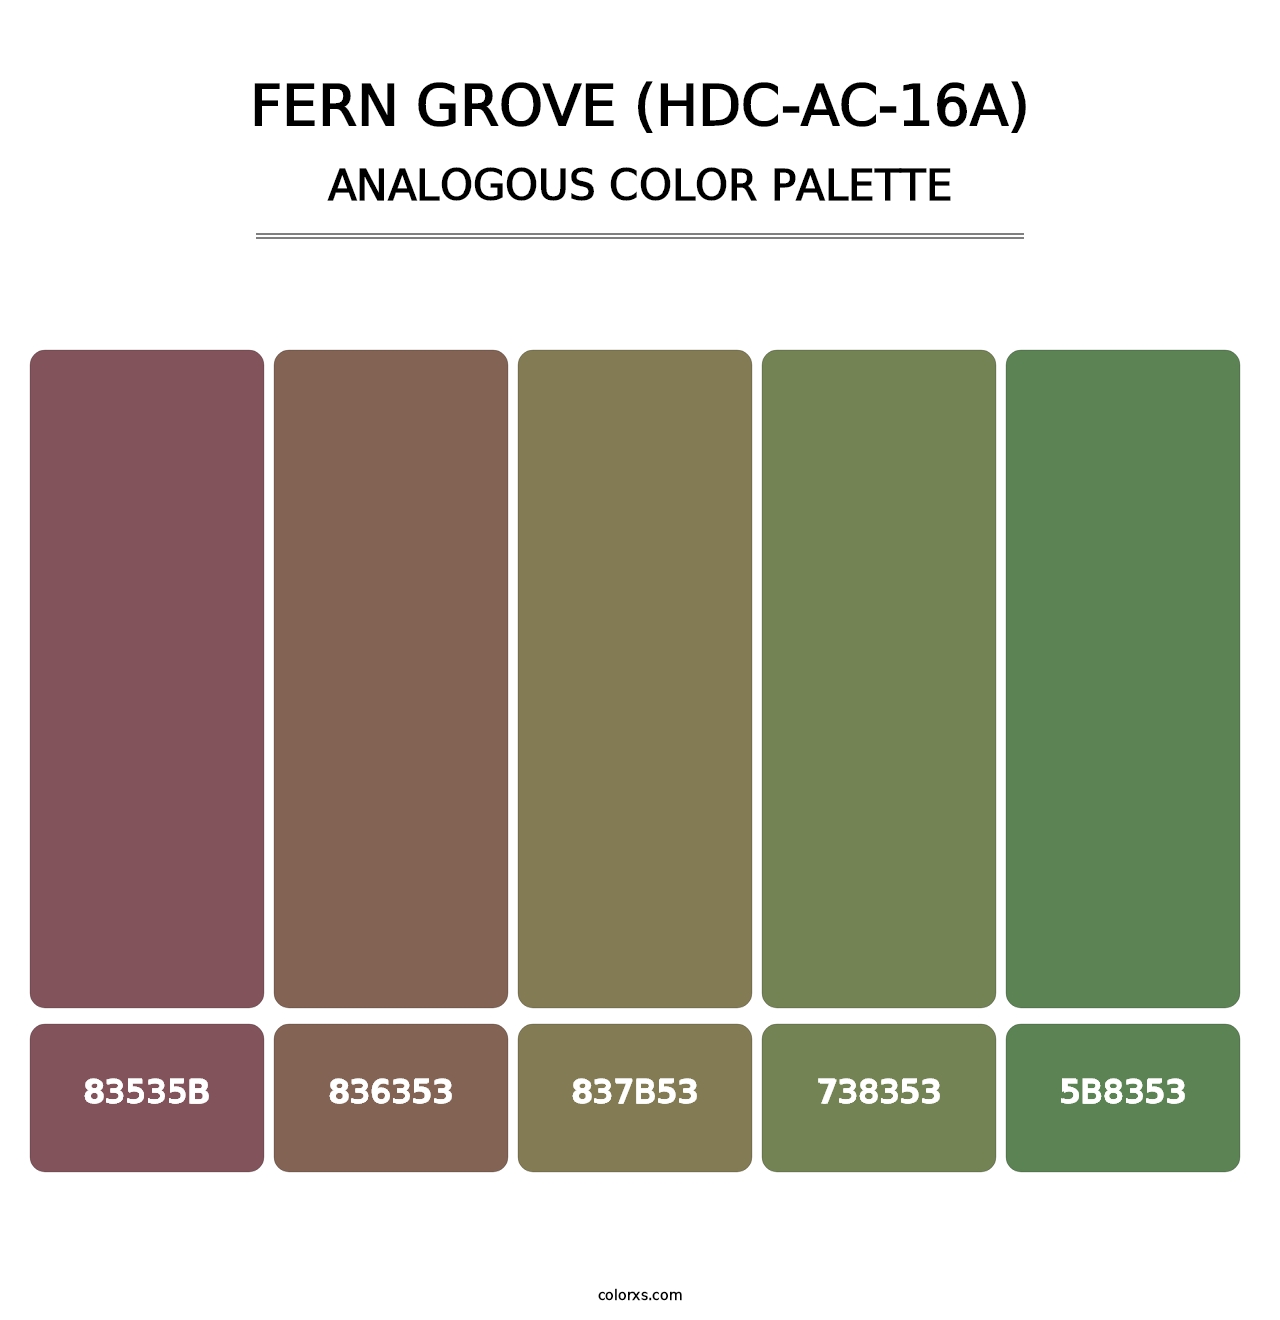 Fern Grove (HDC-AC-16A) - Analogous Color Palette